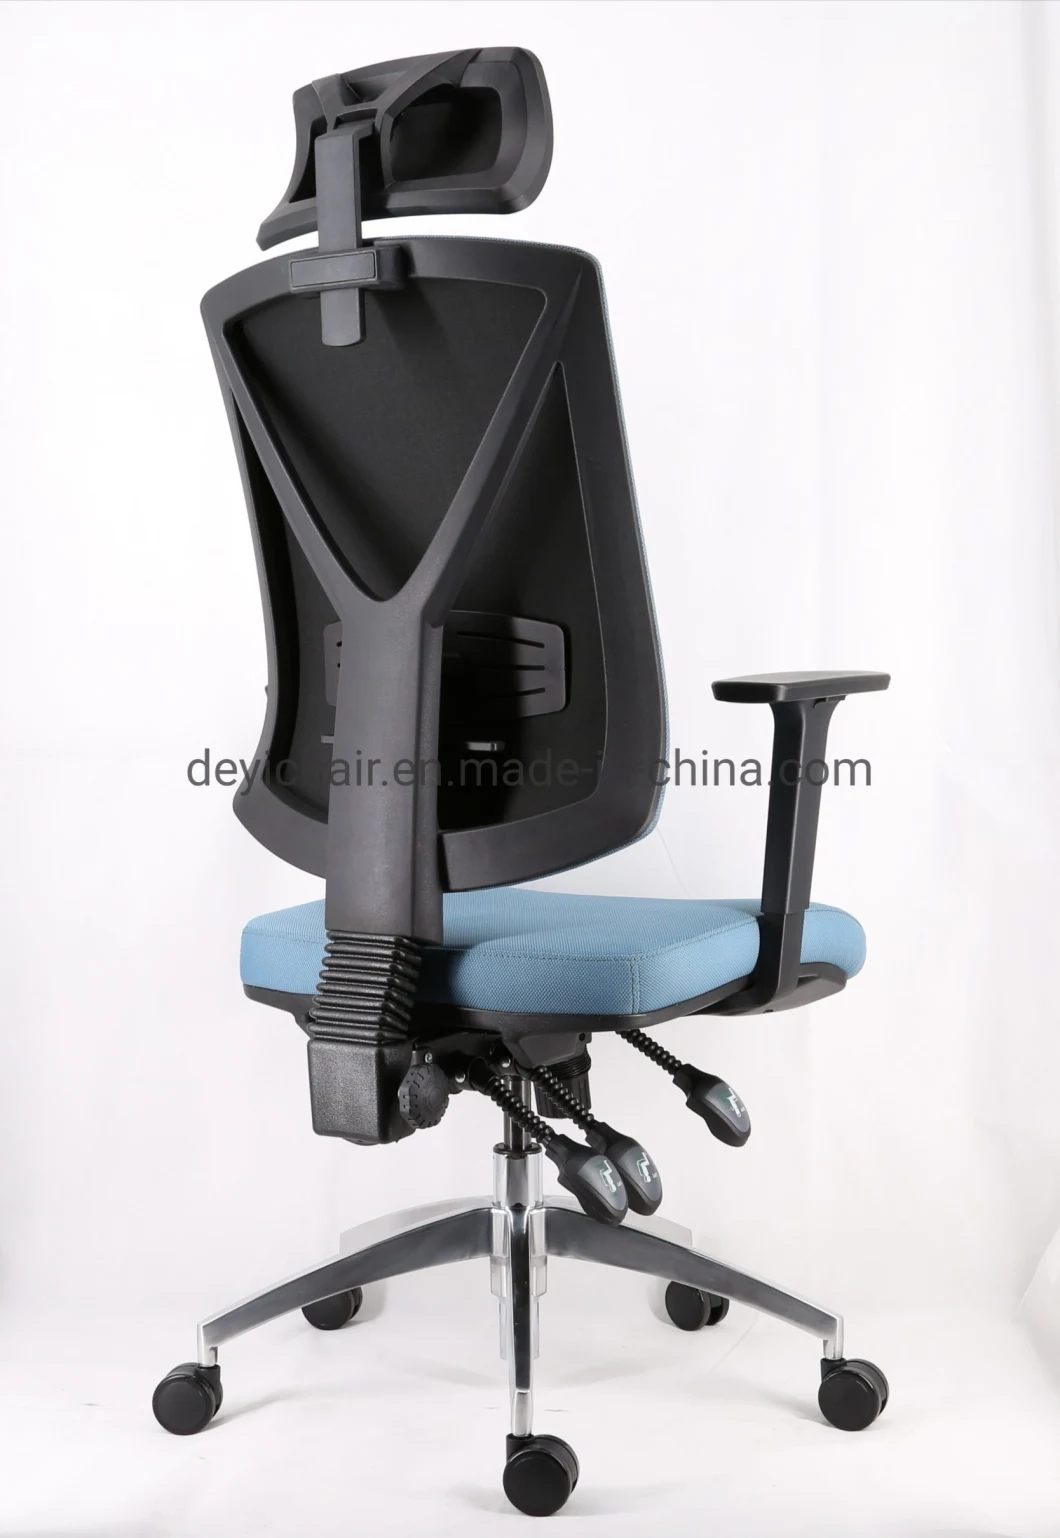 Headrest Optional Heavy Duty Mechanism Aluminium Base with PU Castors Office Chair